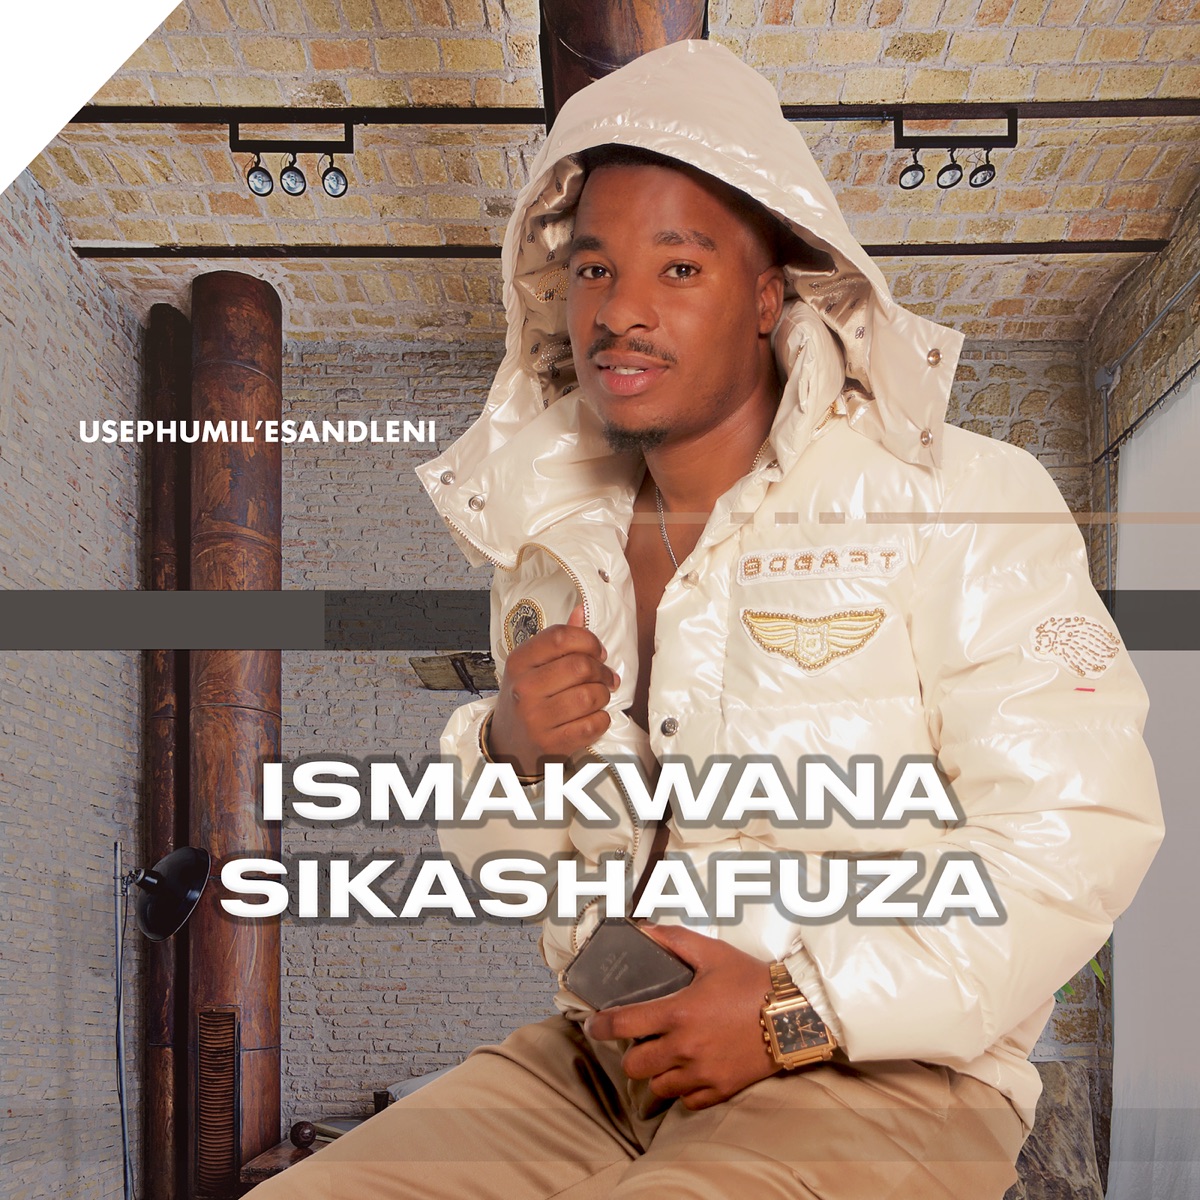 iSmakwana sikaShafuza